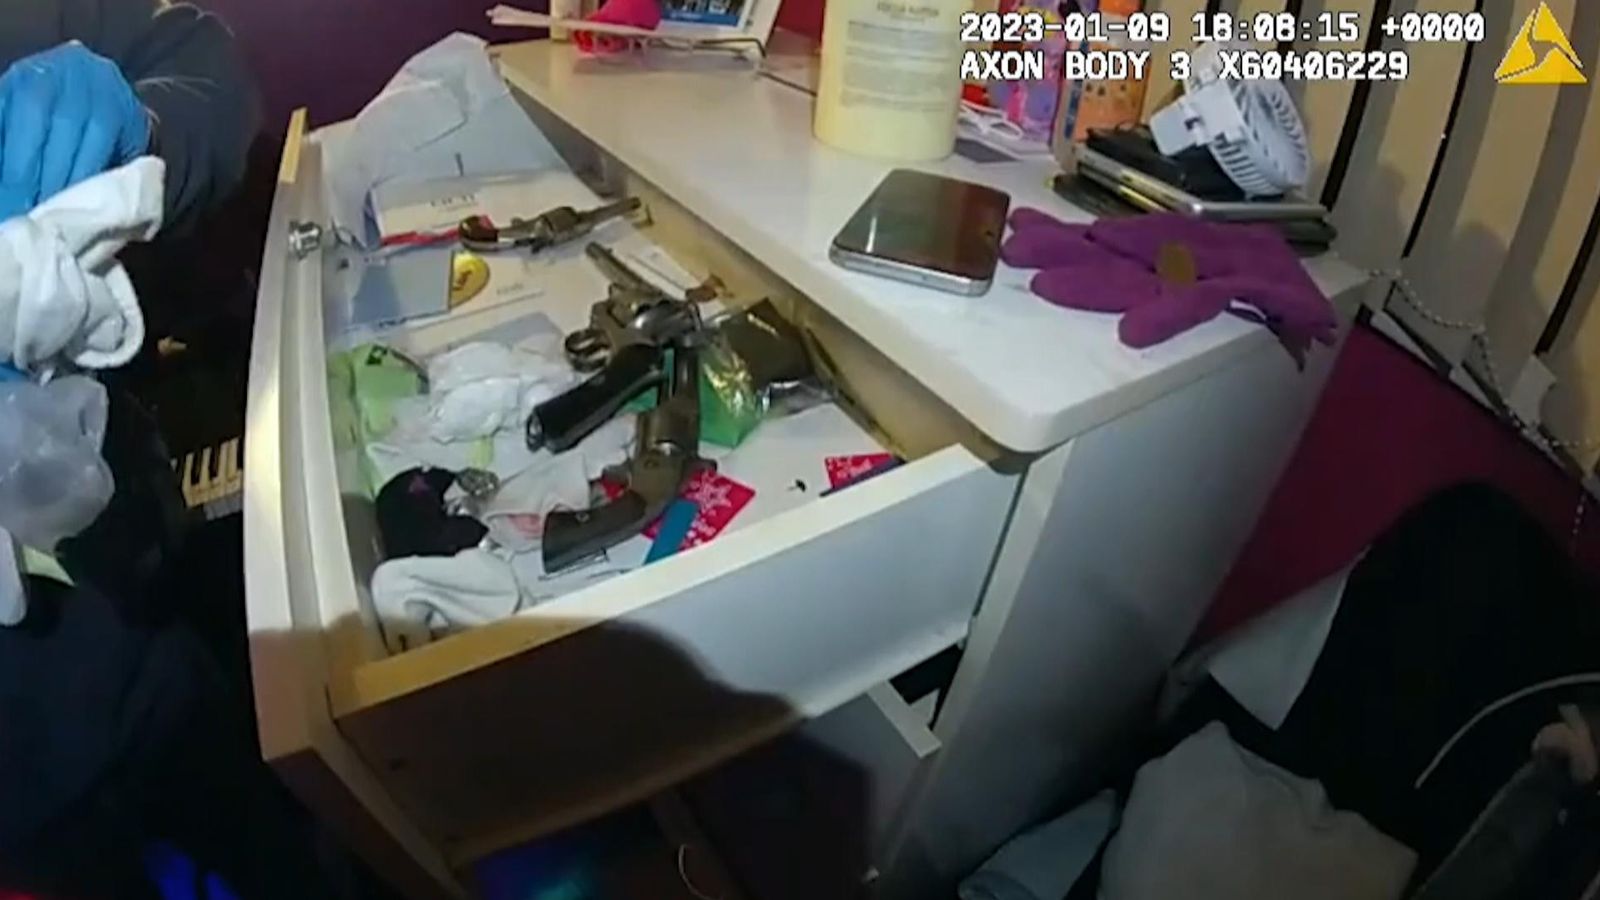 „Нагли и безстрашни“: Пистолети, скрити в чекмеджето за детско бельо сред стотици огнестрелни оръжия, иззети в Лондон